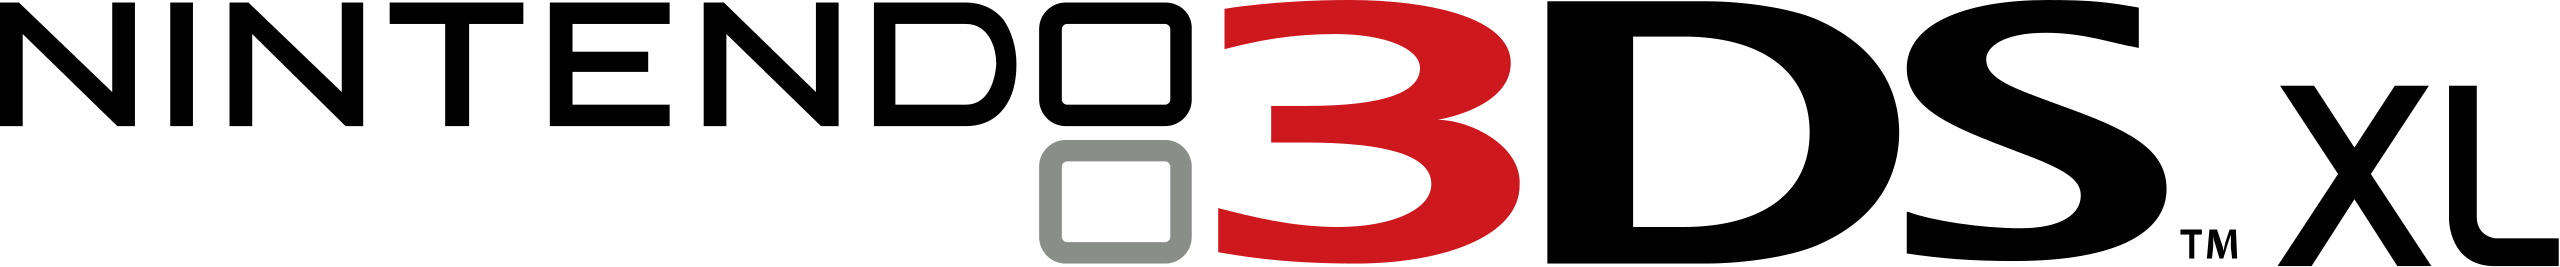 File Nintendo 3ds Xl Logo Svg Wikimedia Commons